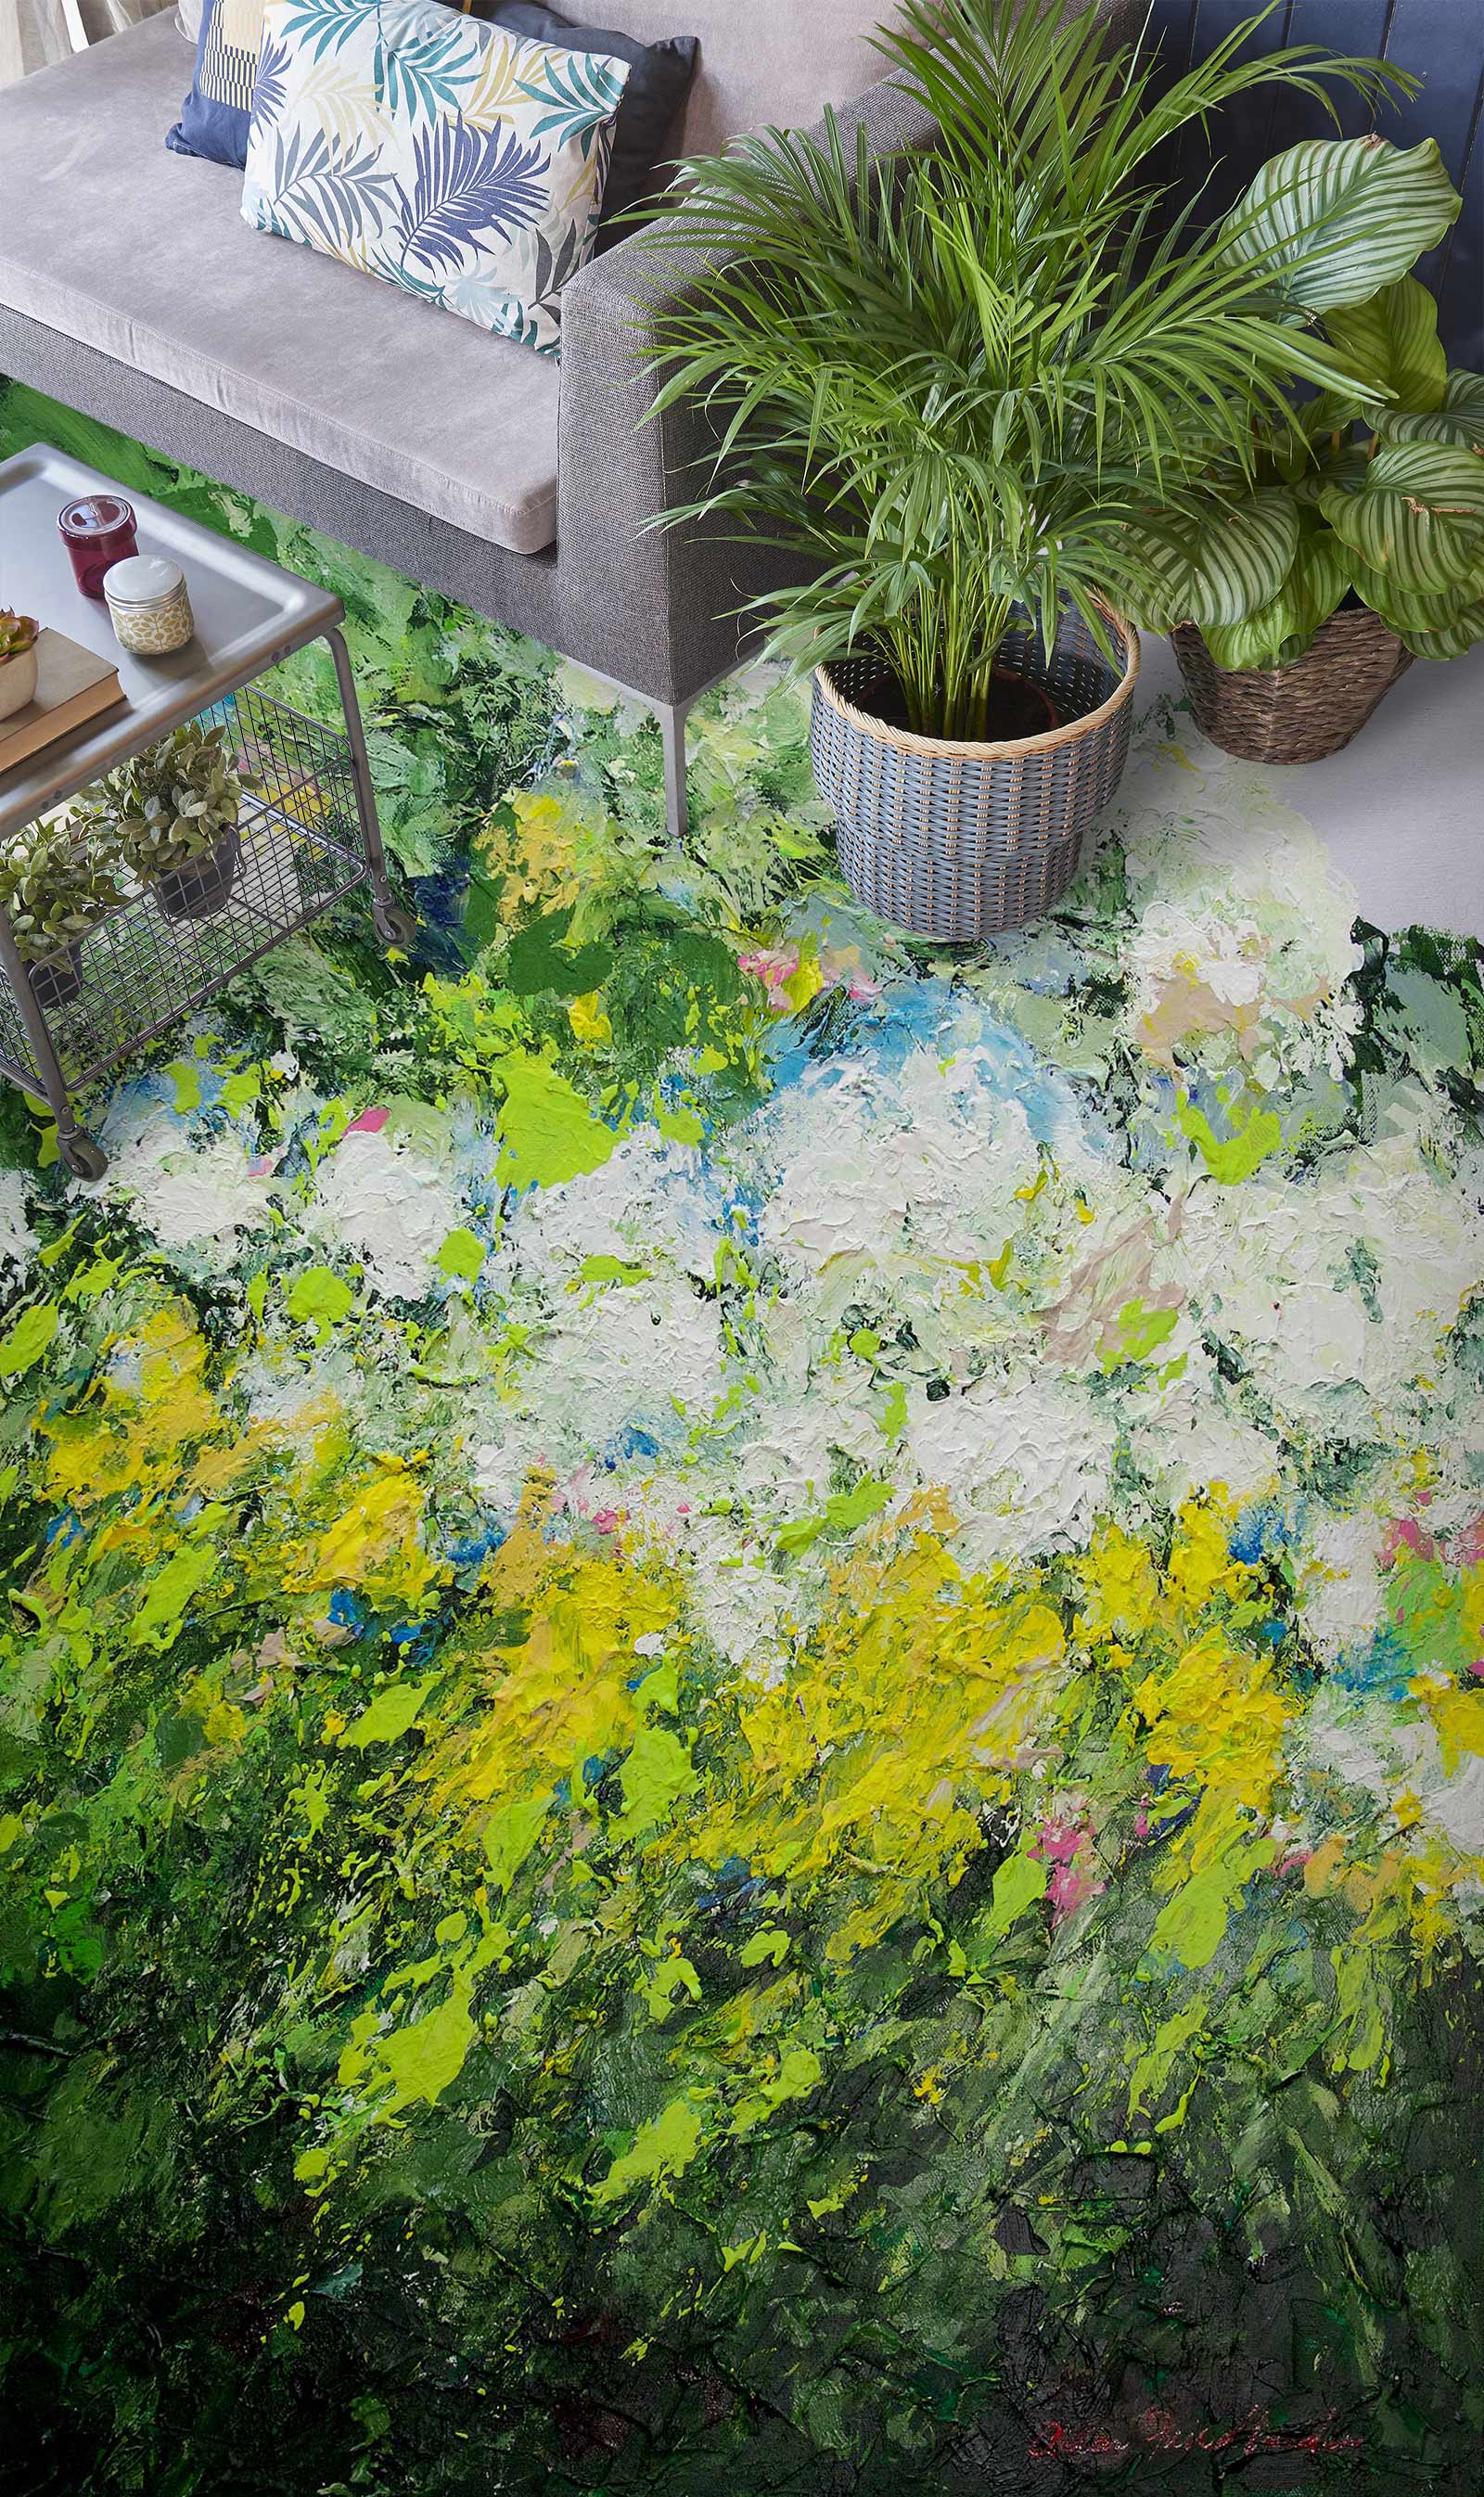 3D Flower Bush Grass Pattern 96112 Allan P. Friedlander Floor Mural  Wallpaper Murals Self-Adhesive Removable Print Epoxy